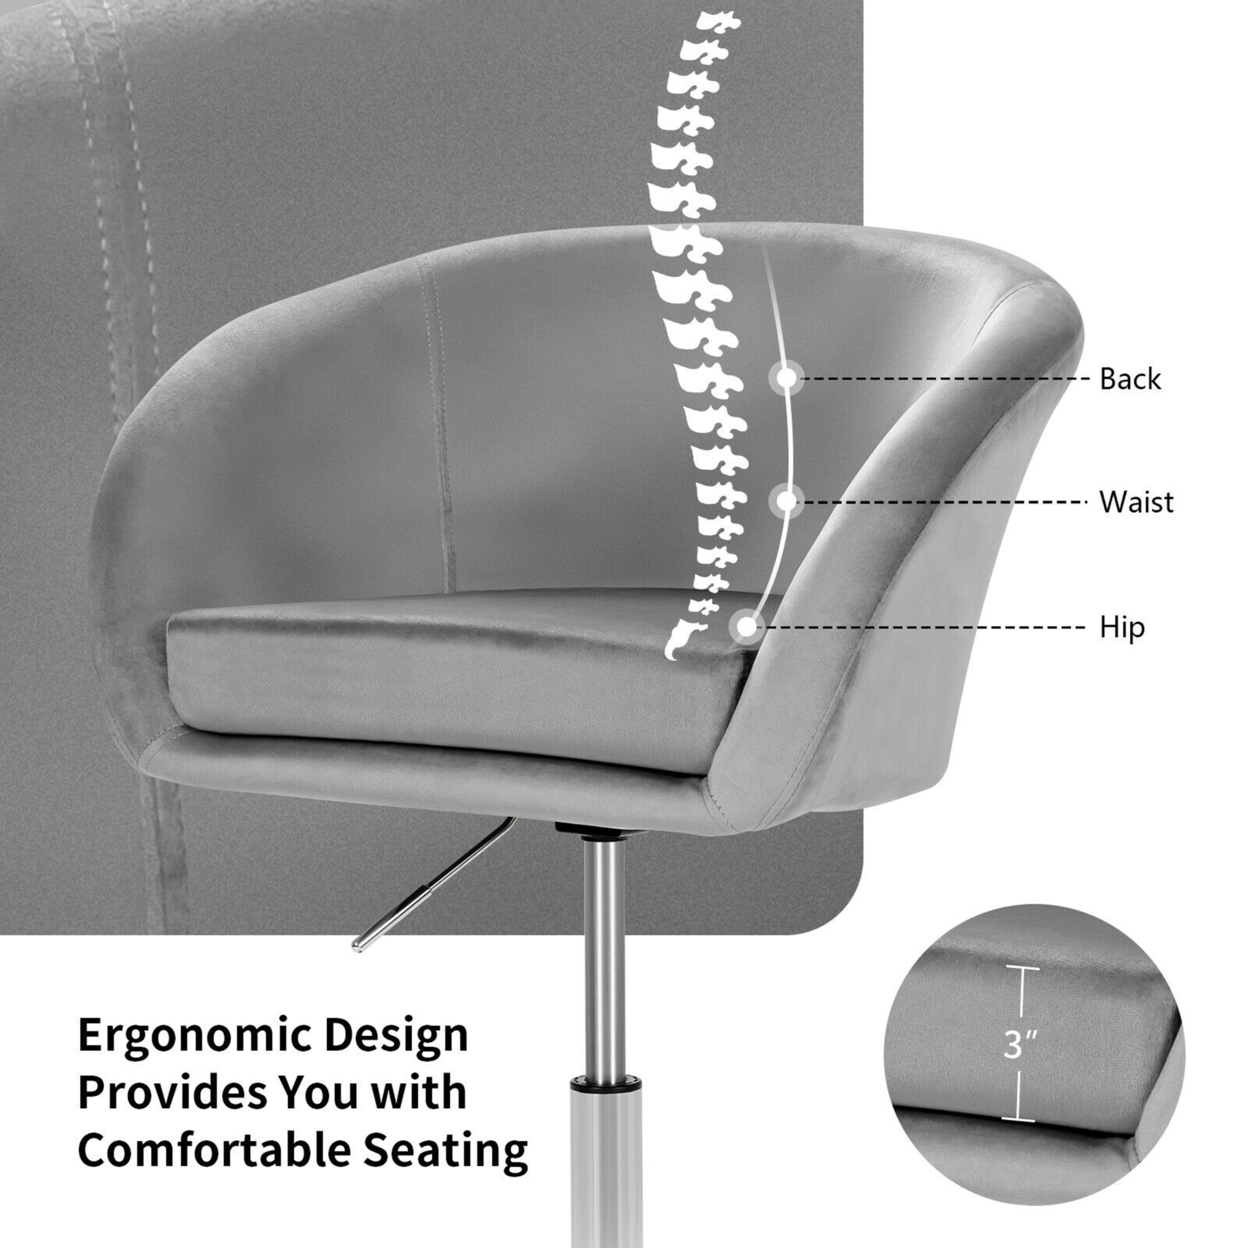 Modern Velvet Chair Height Adjustable Bar Stool Swivel Makeup Seat - Grey